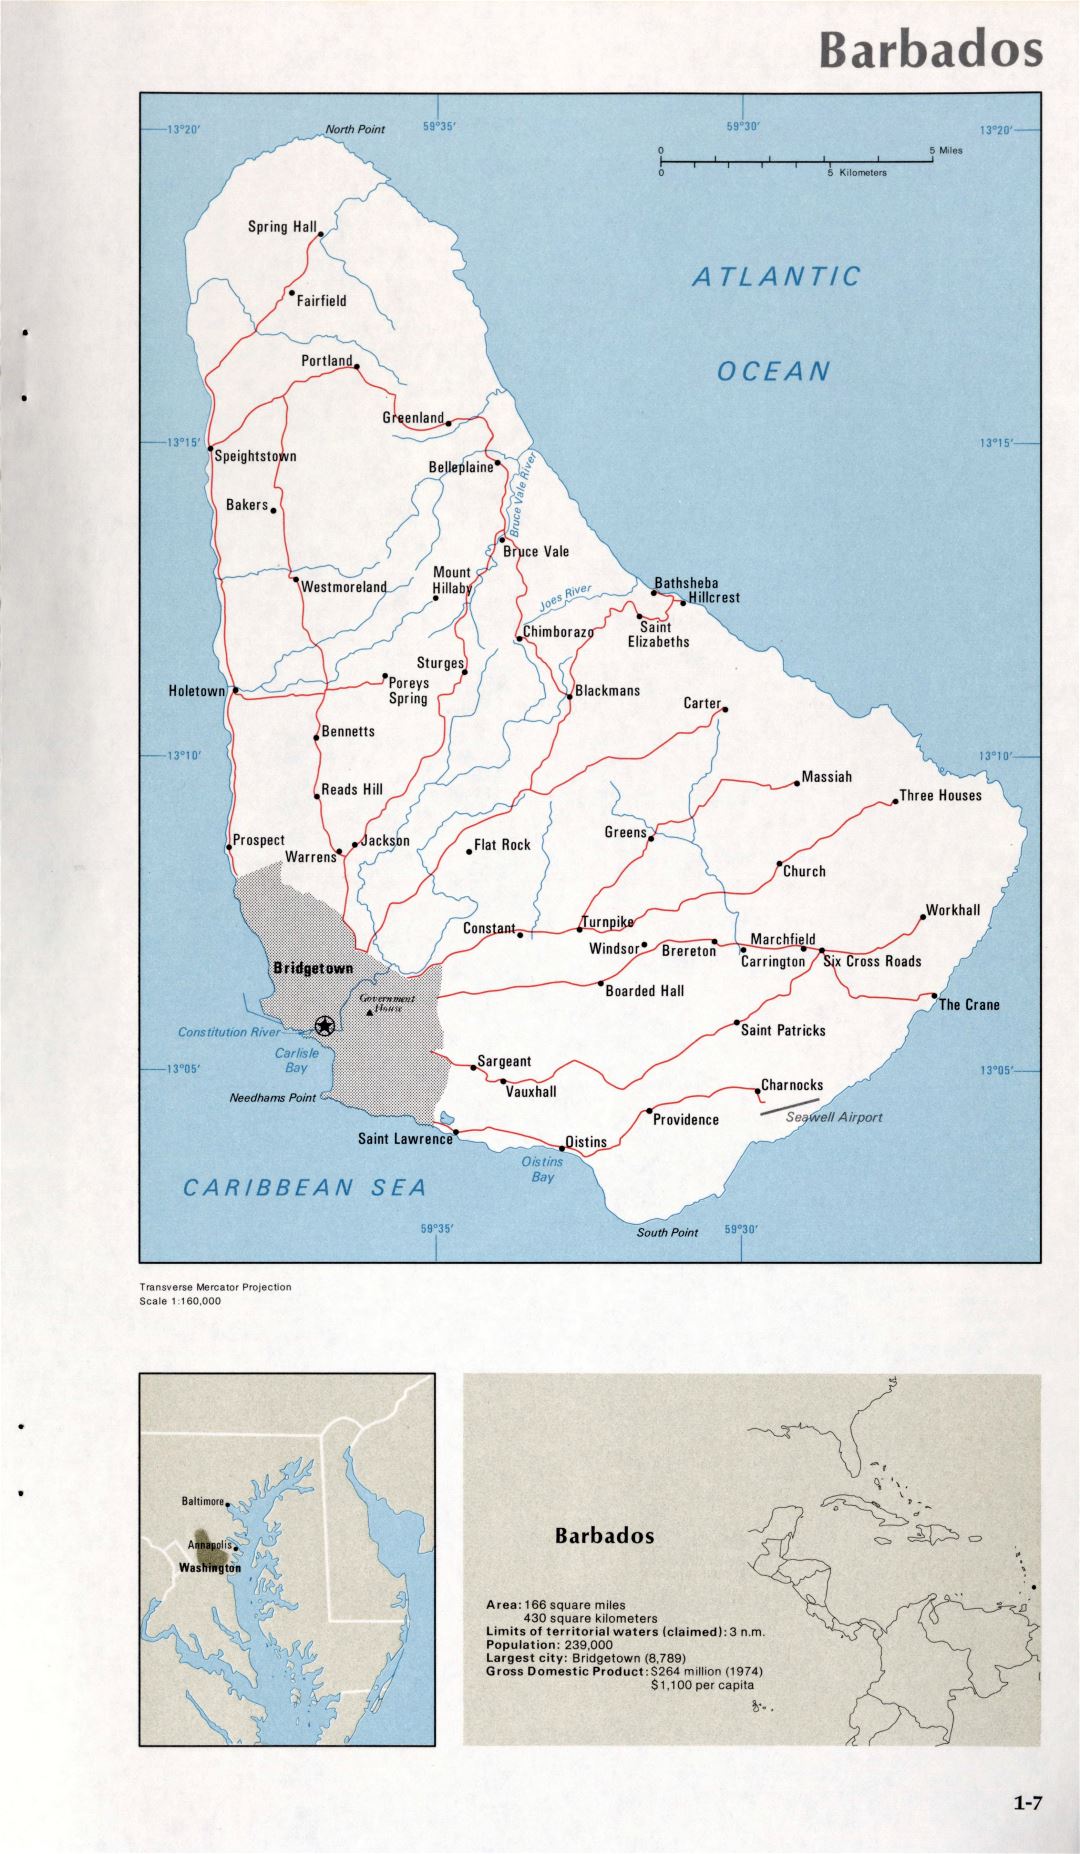 Map of Barbados (1-7)